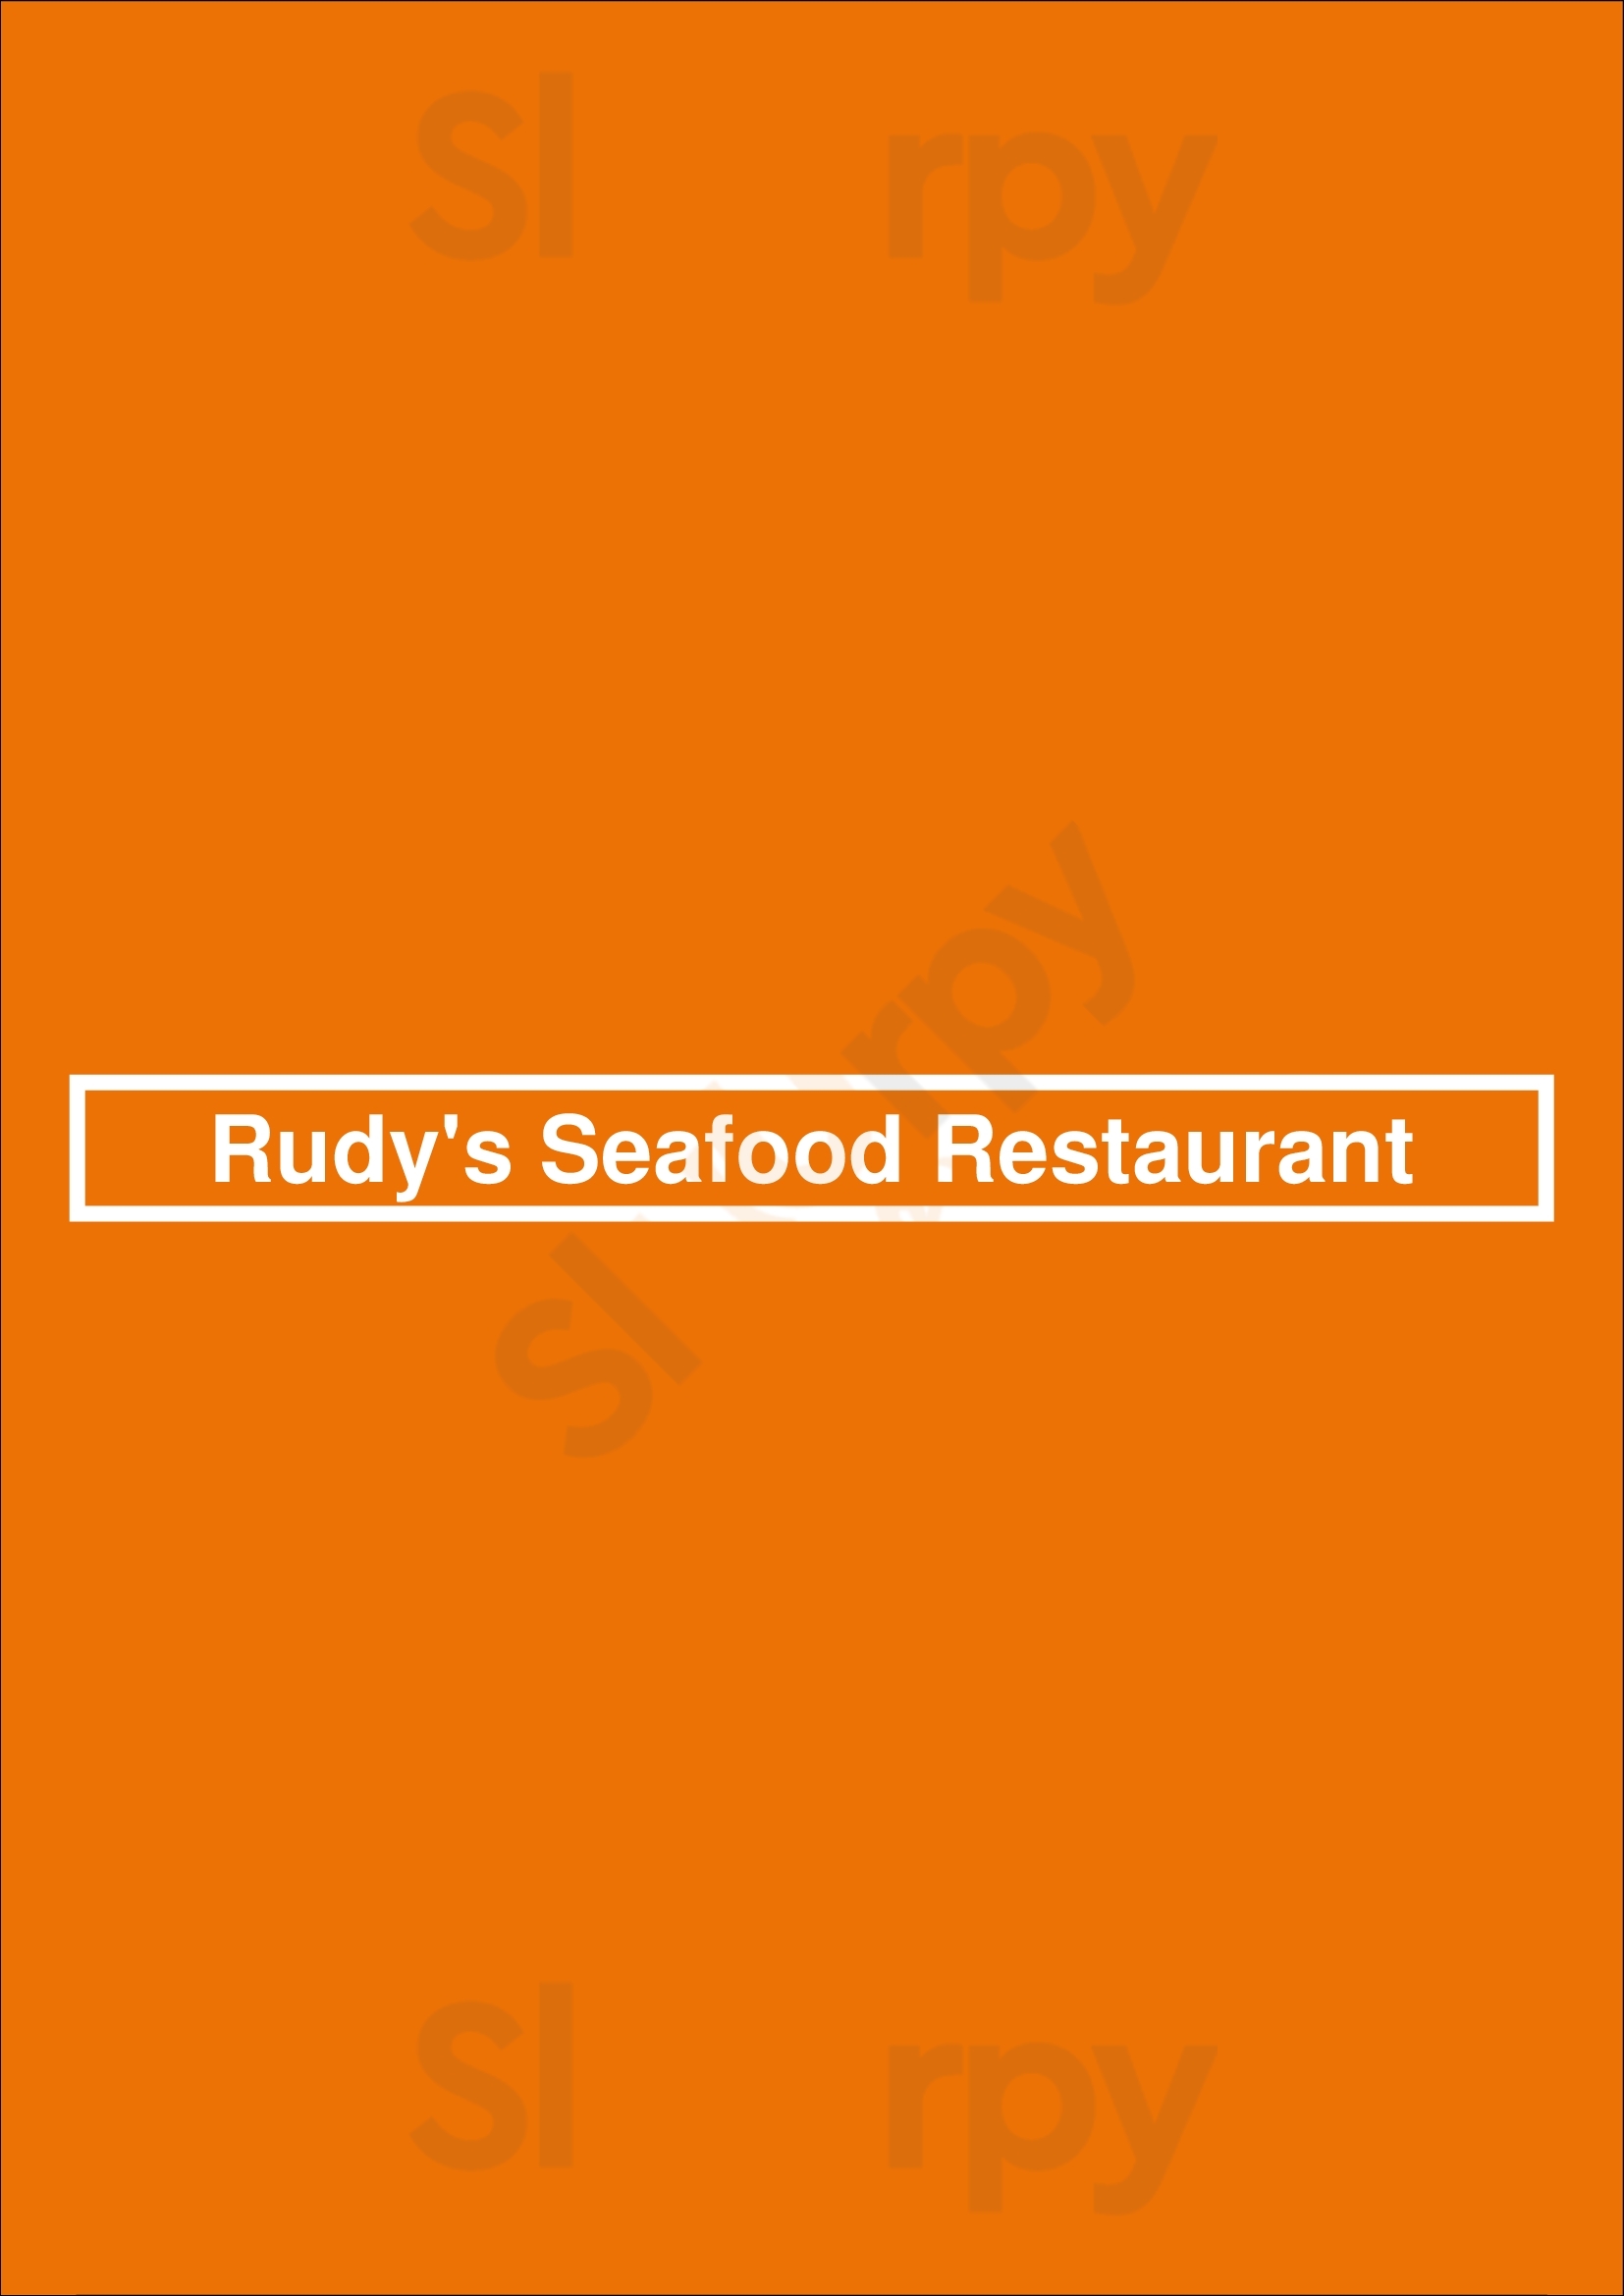 Rudy's Seafood Restaurant Cliffside Park Menu - 1